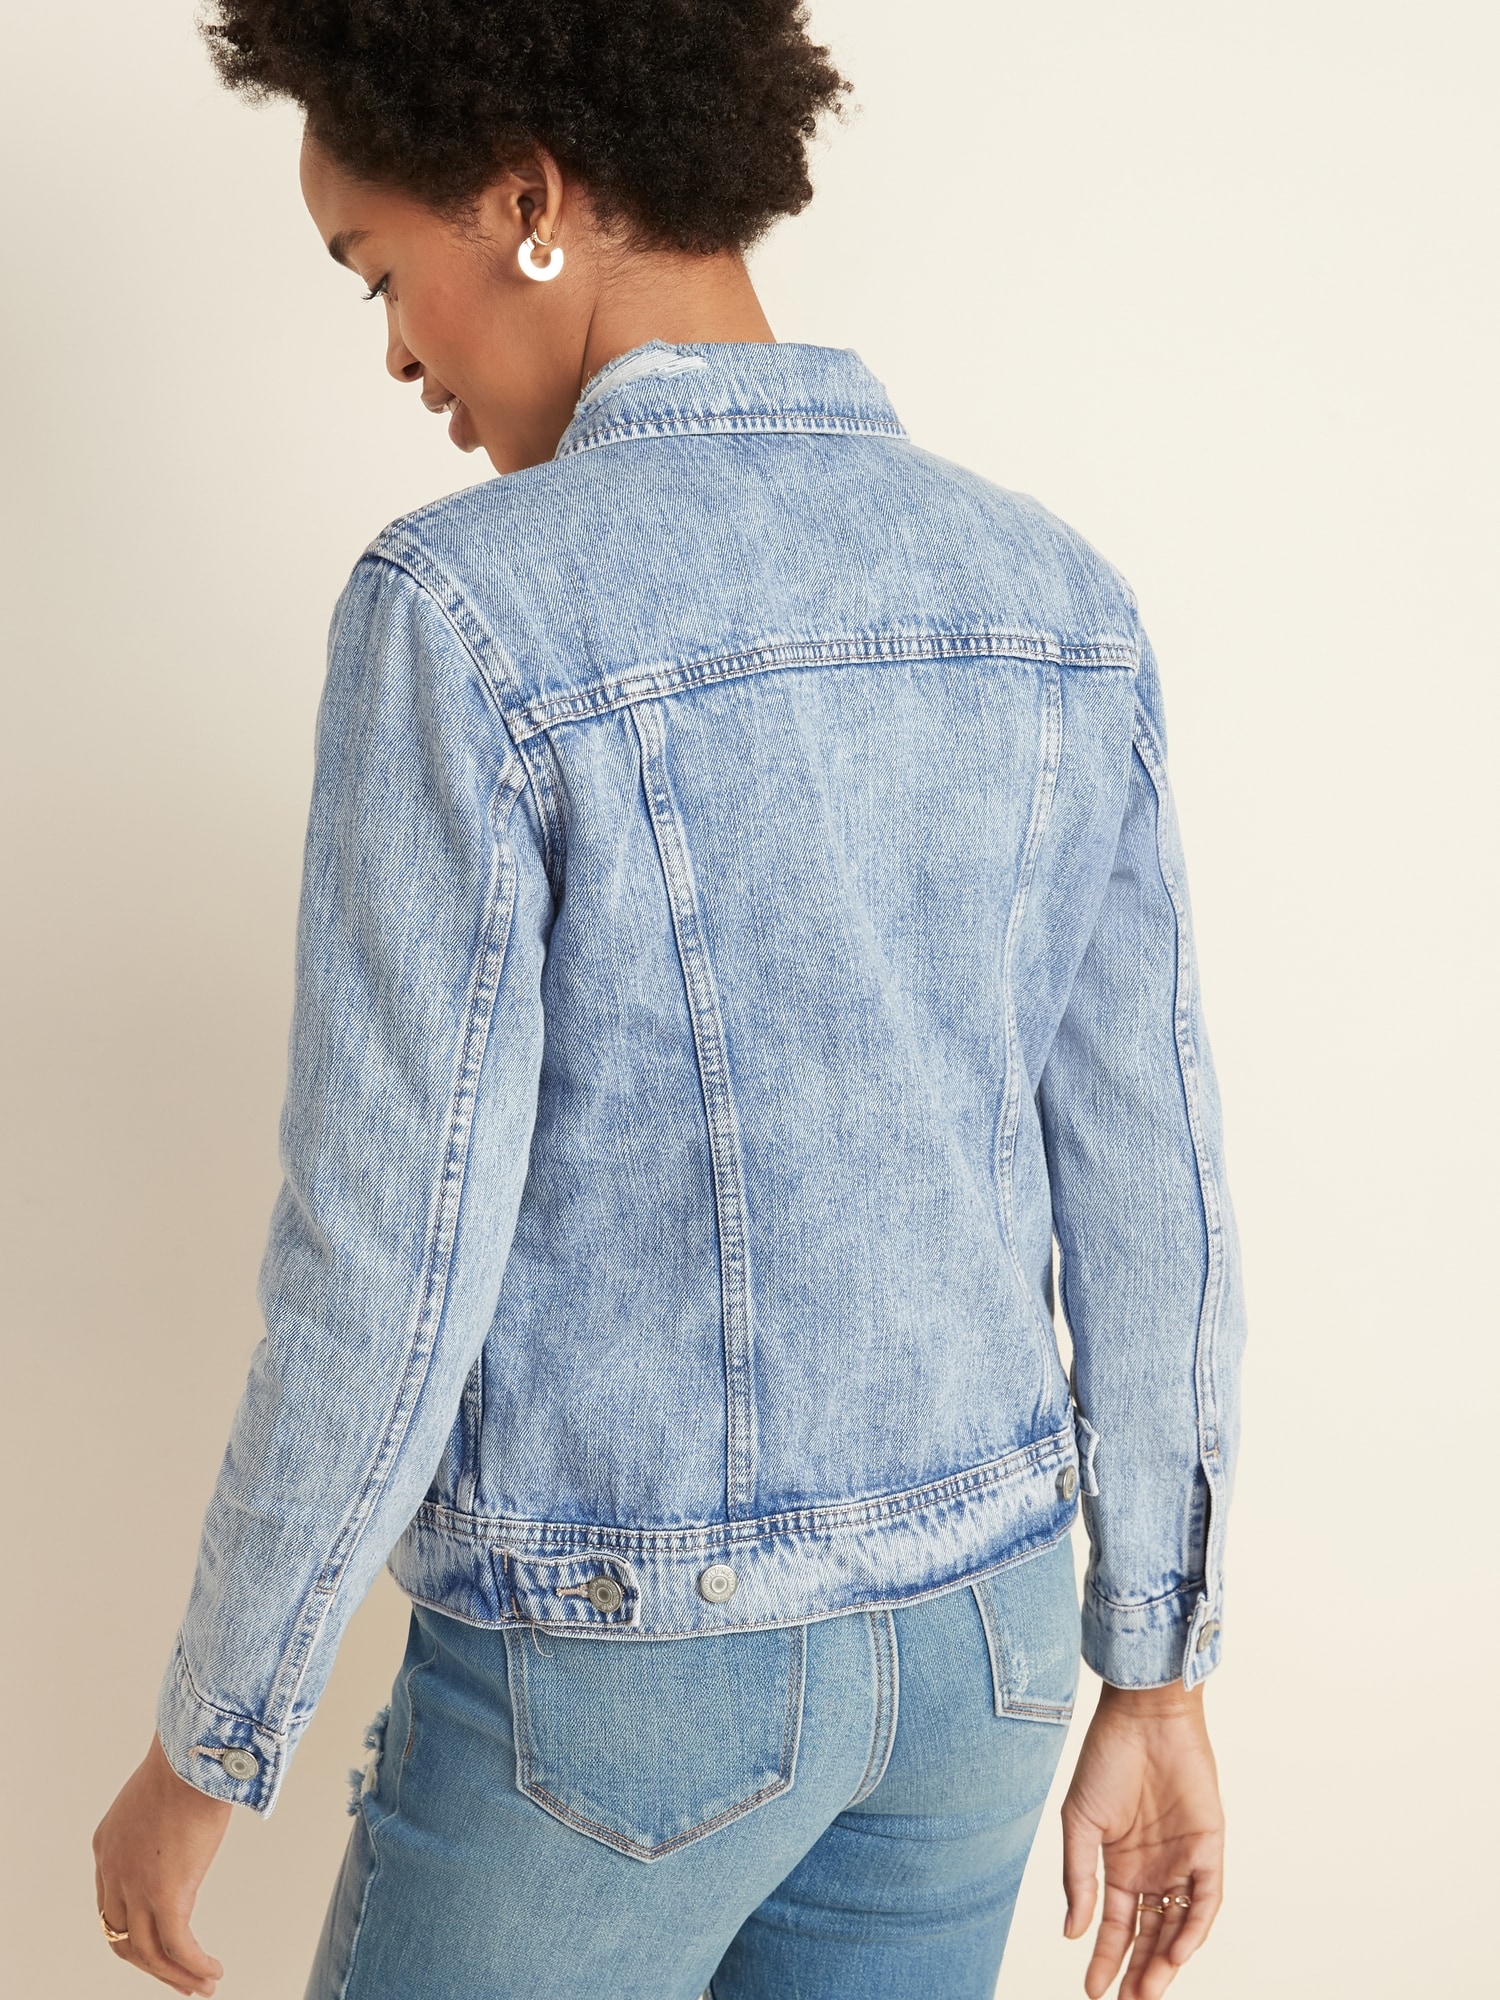 light distressed jean jacket